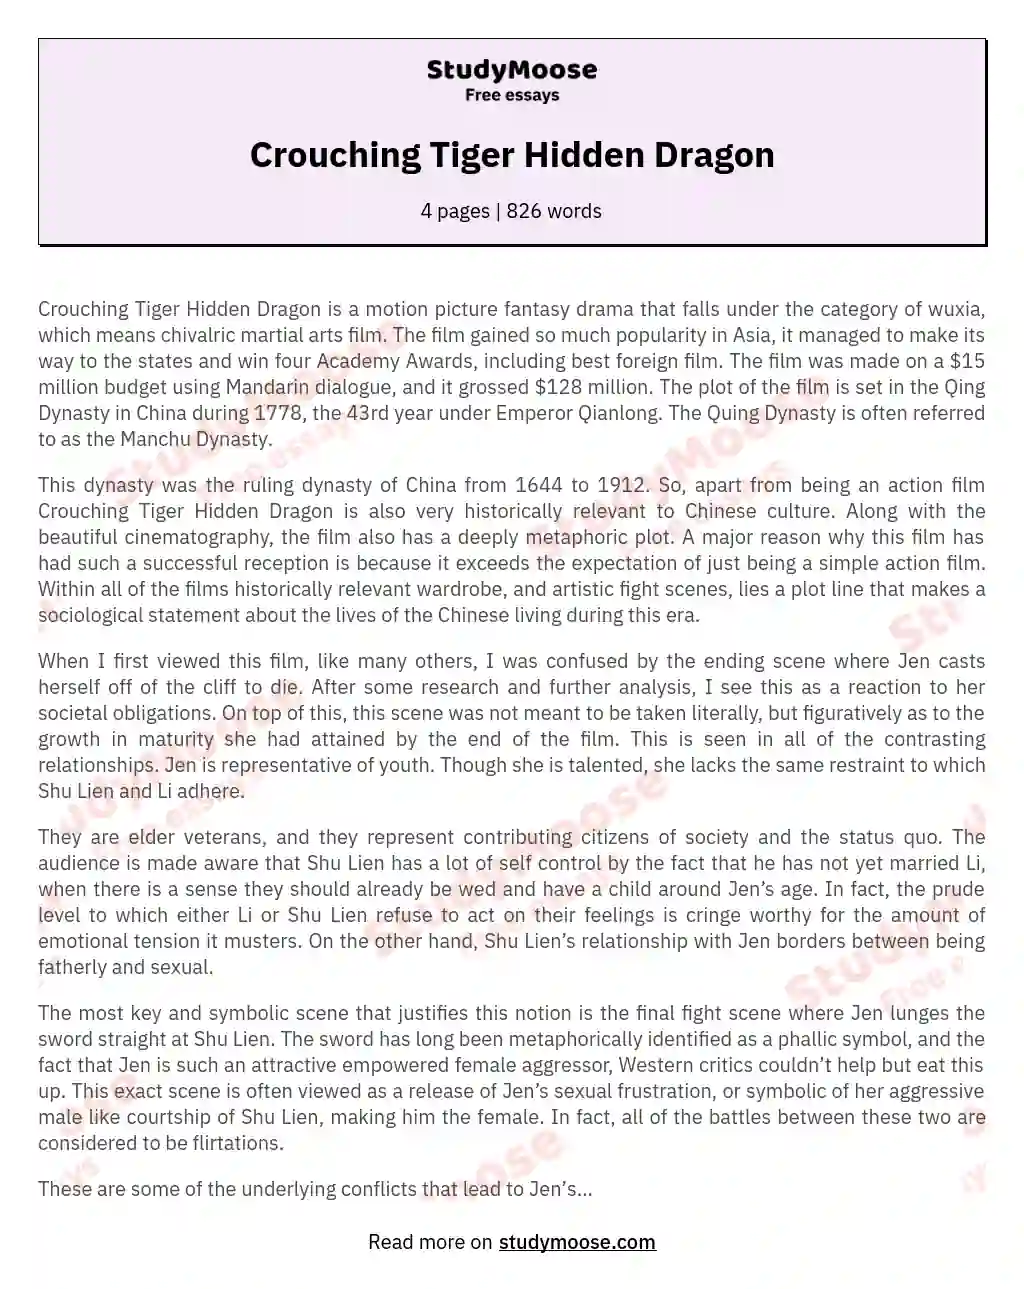 Crouching Tiger Hidden Dragon essay